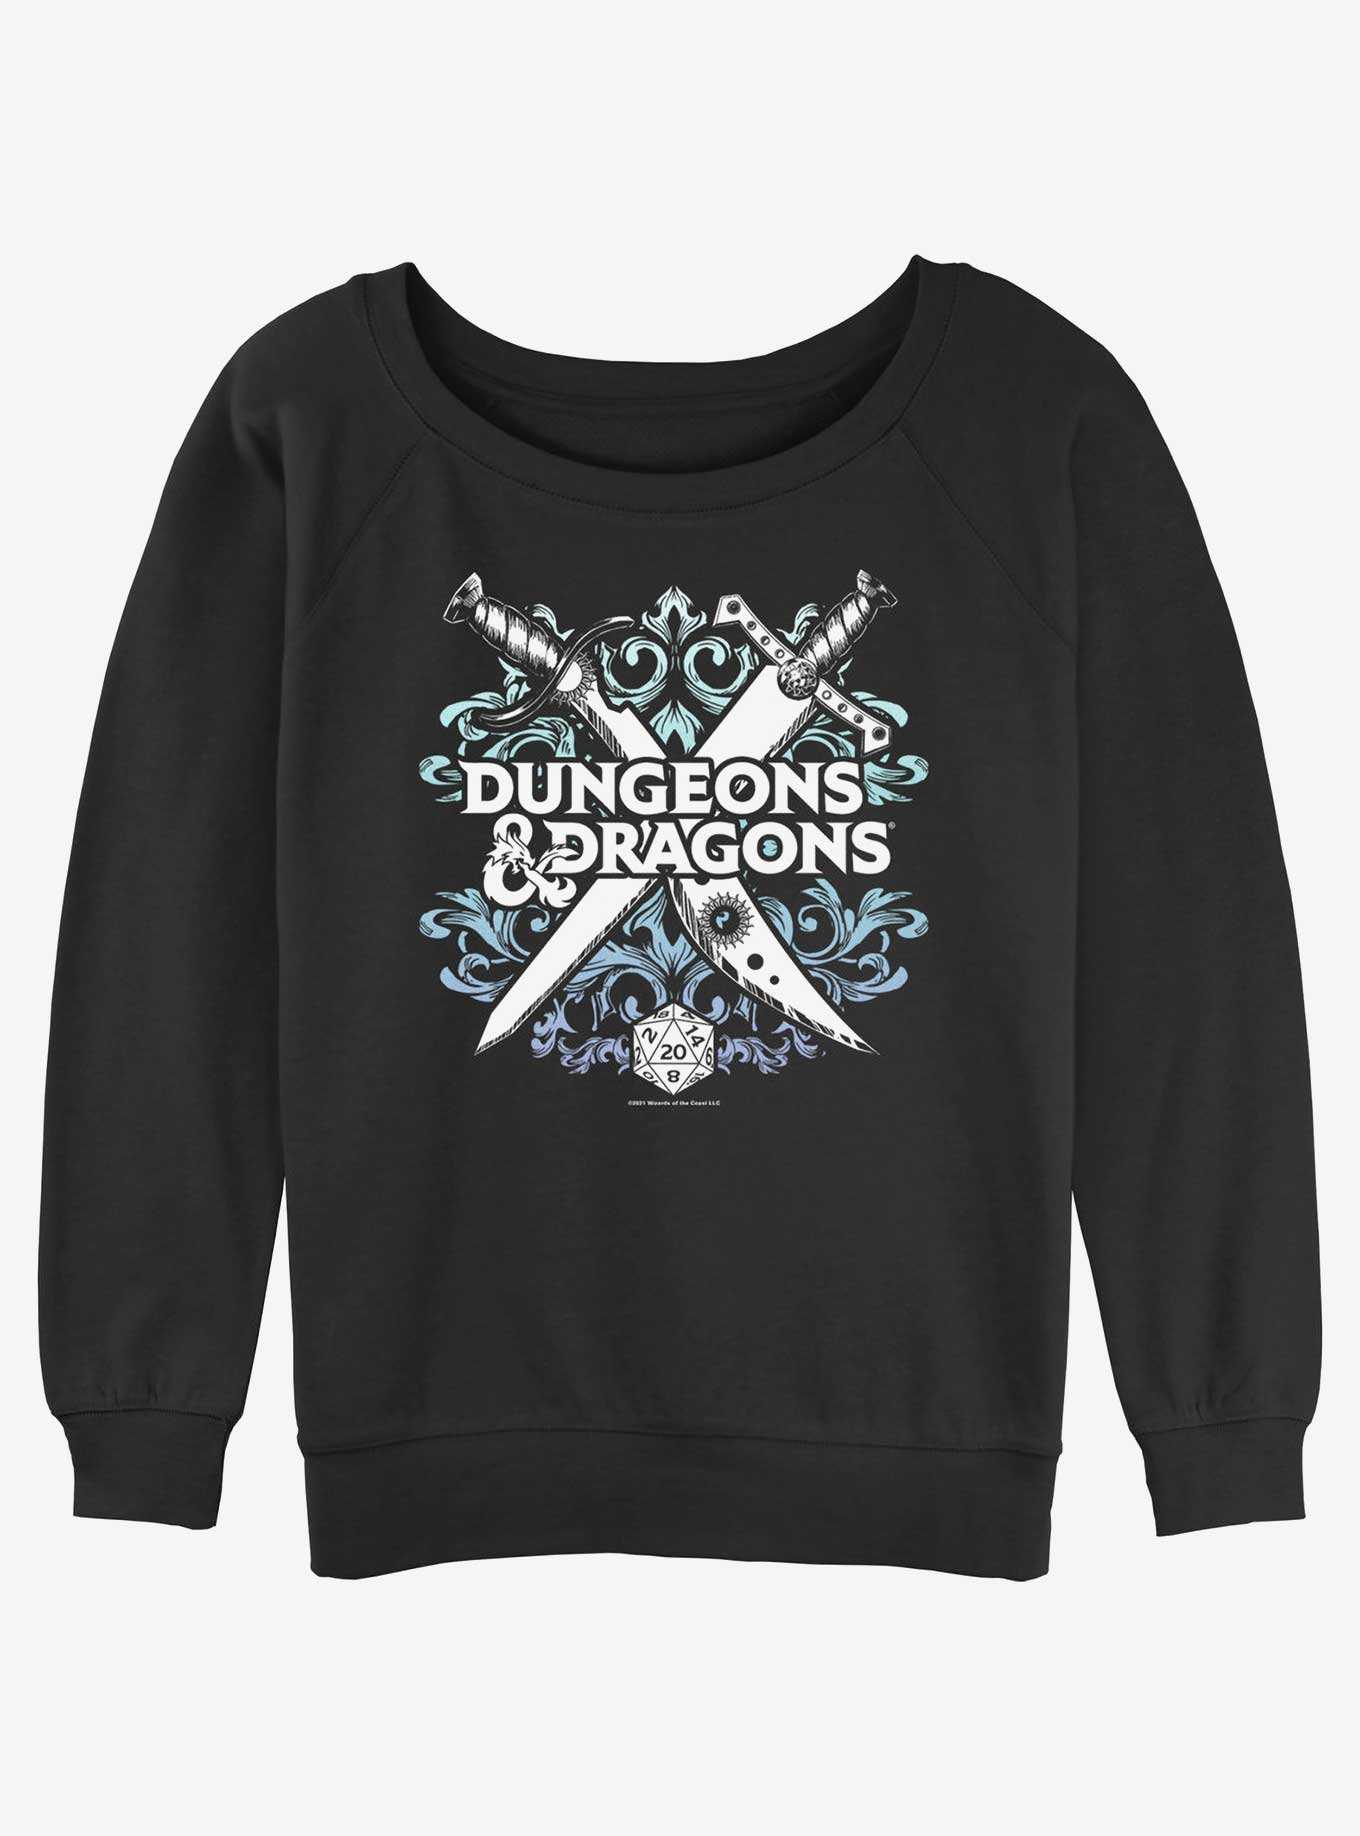 Dungeons & Dragons Decorative Crossed Weapons Logo Girls Slouchy Sweatshirt, , hi-res